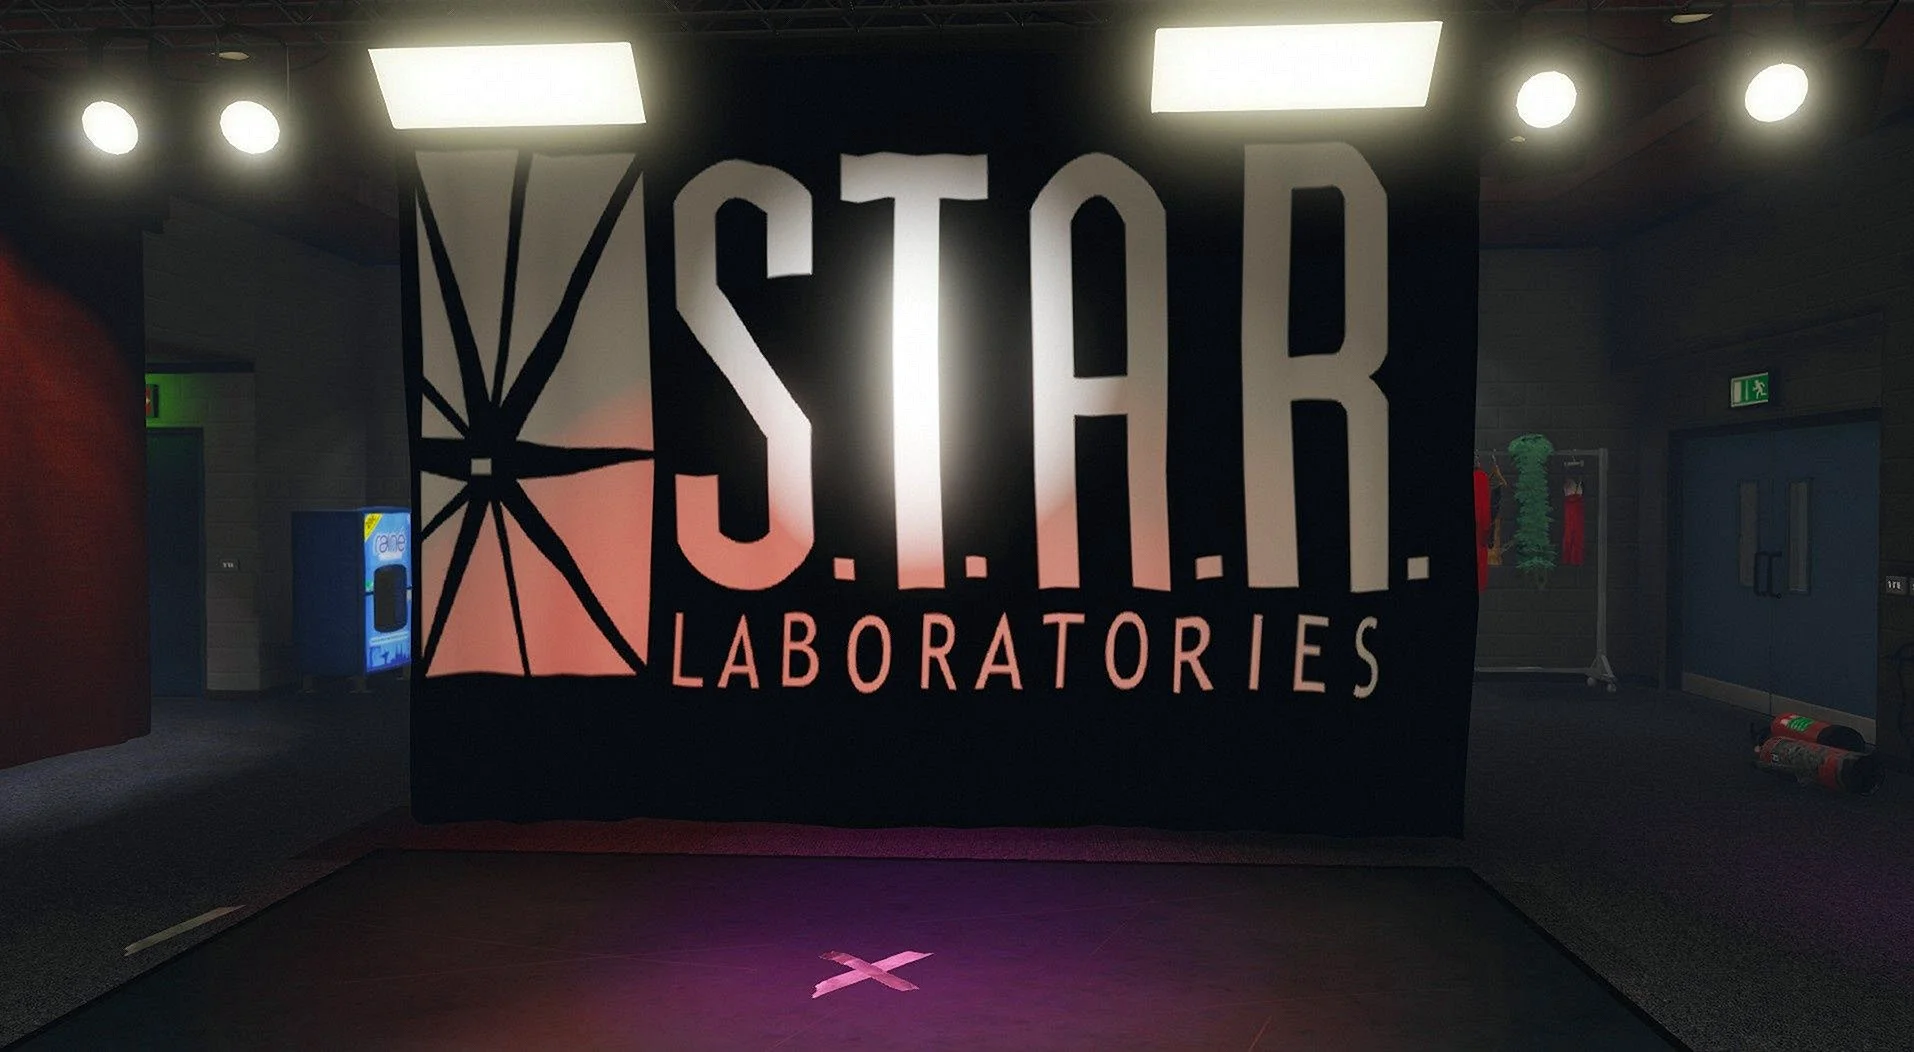 Star Laboratories Wallpaper